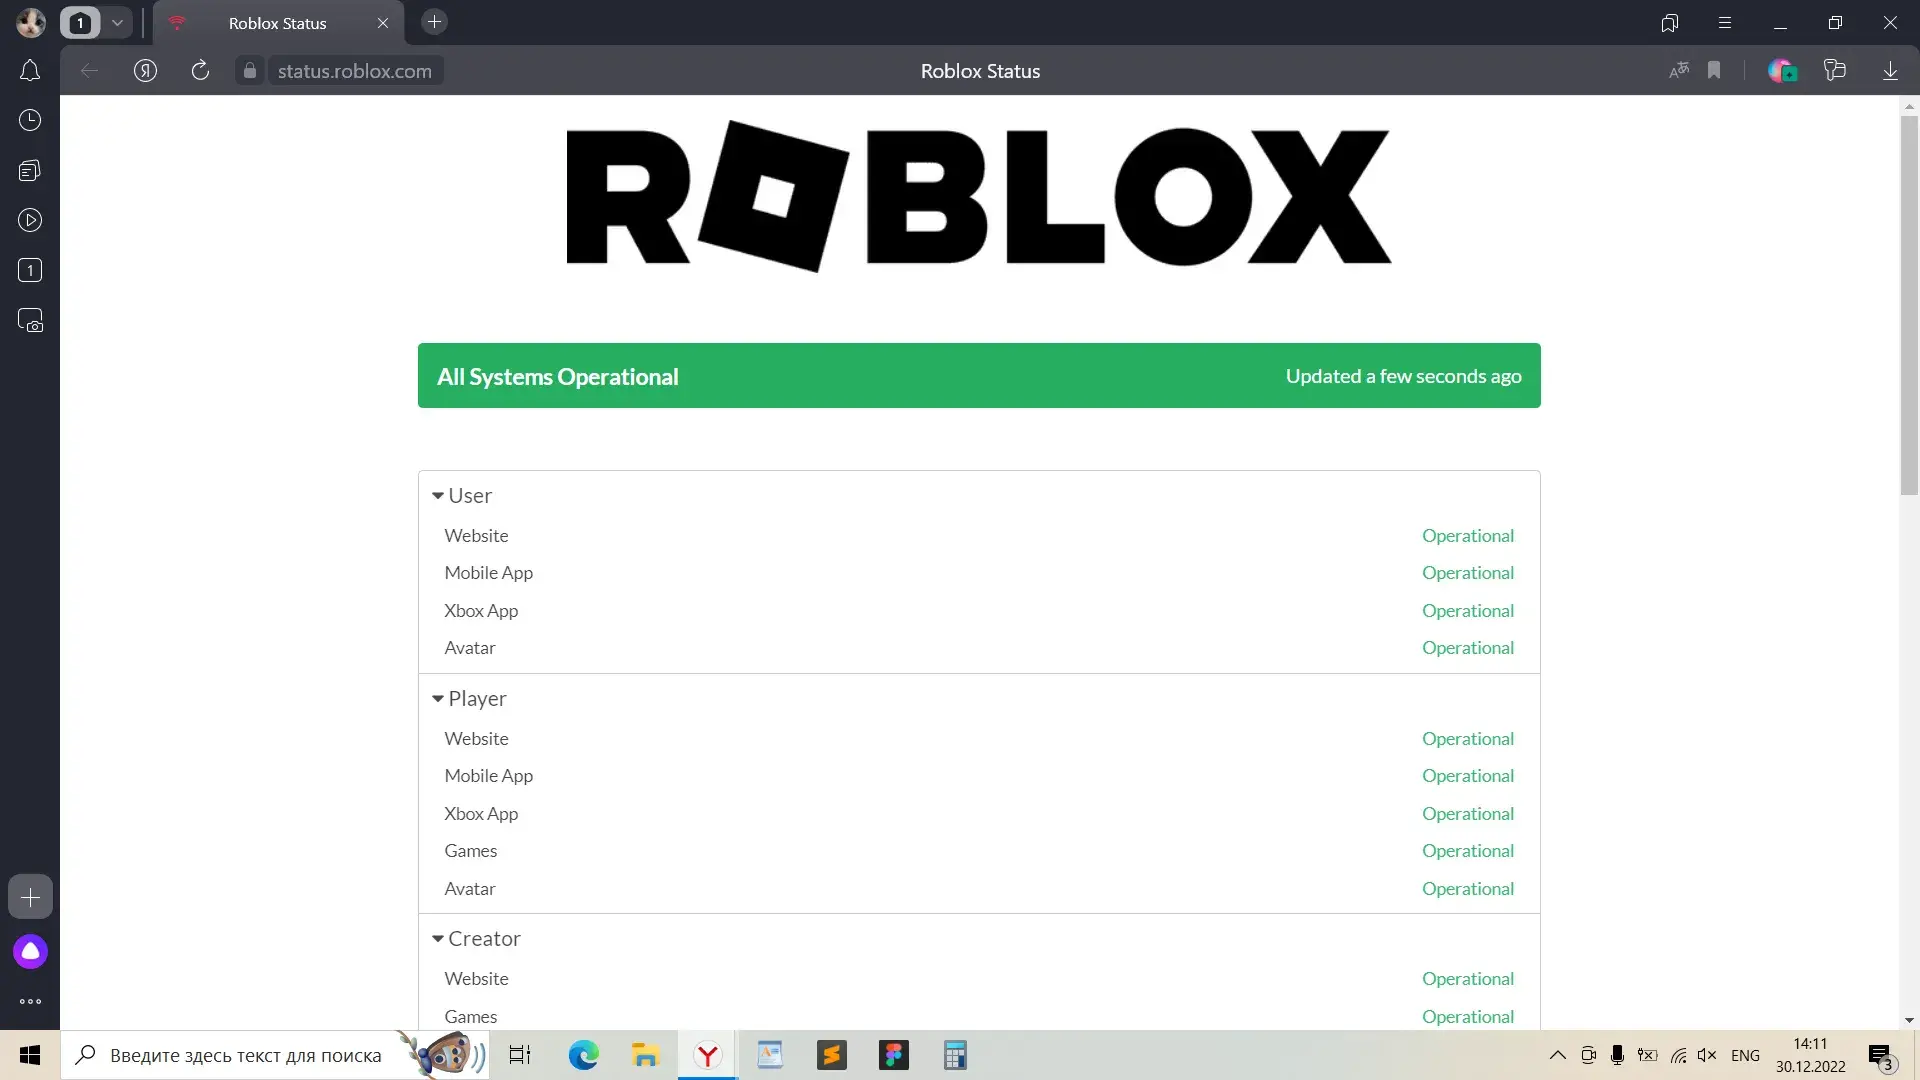 Status der Server auf status.roblox.com